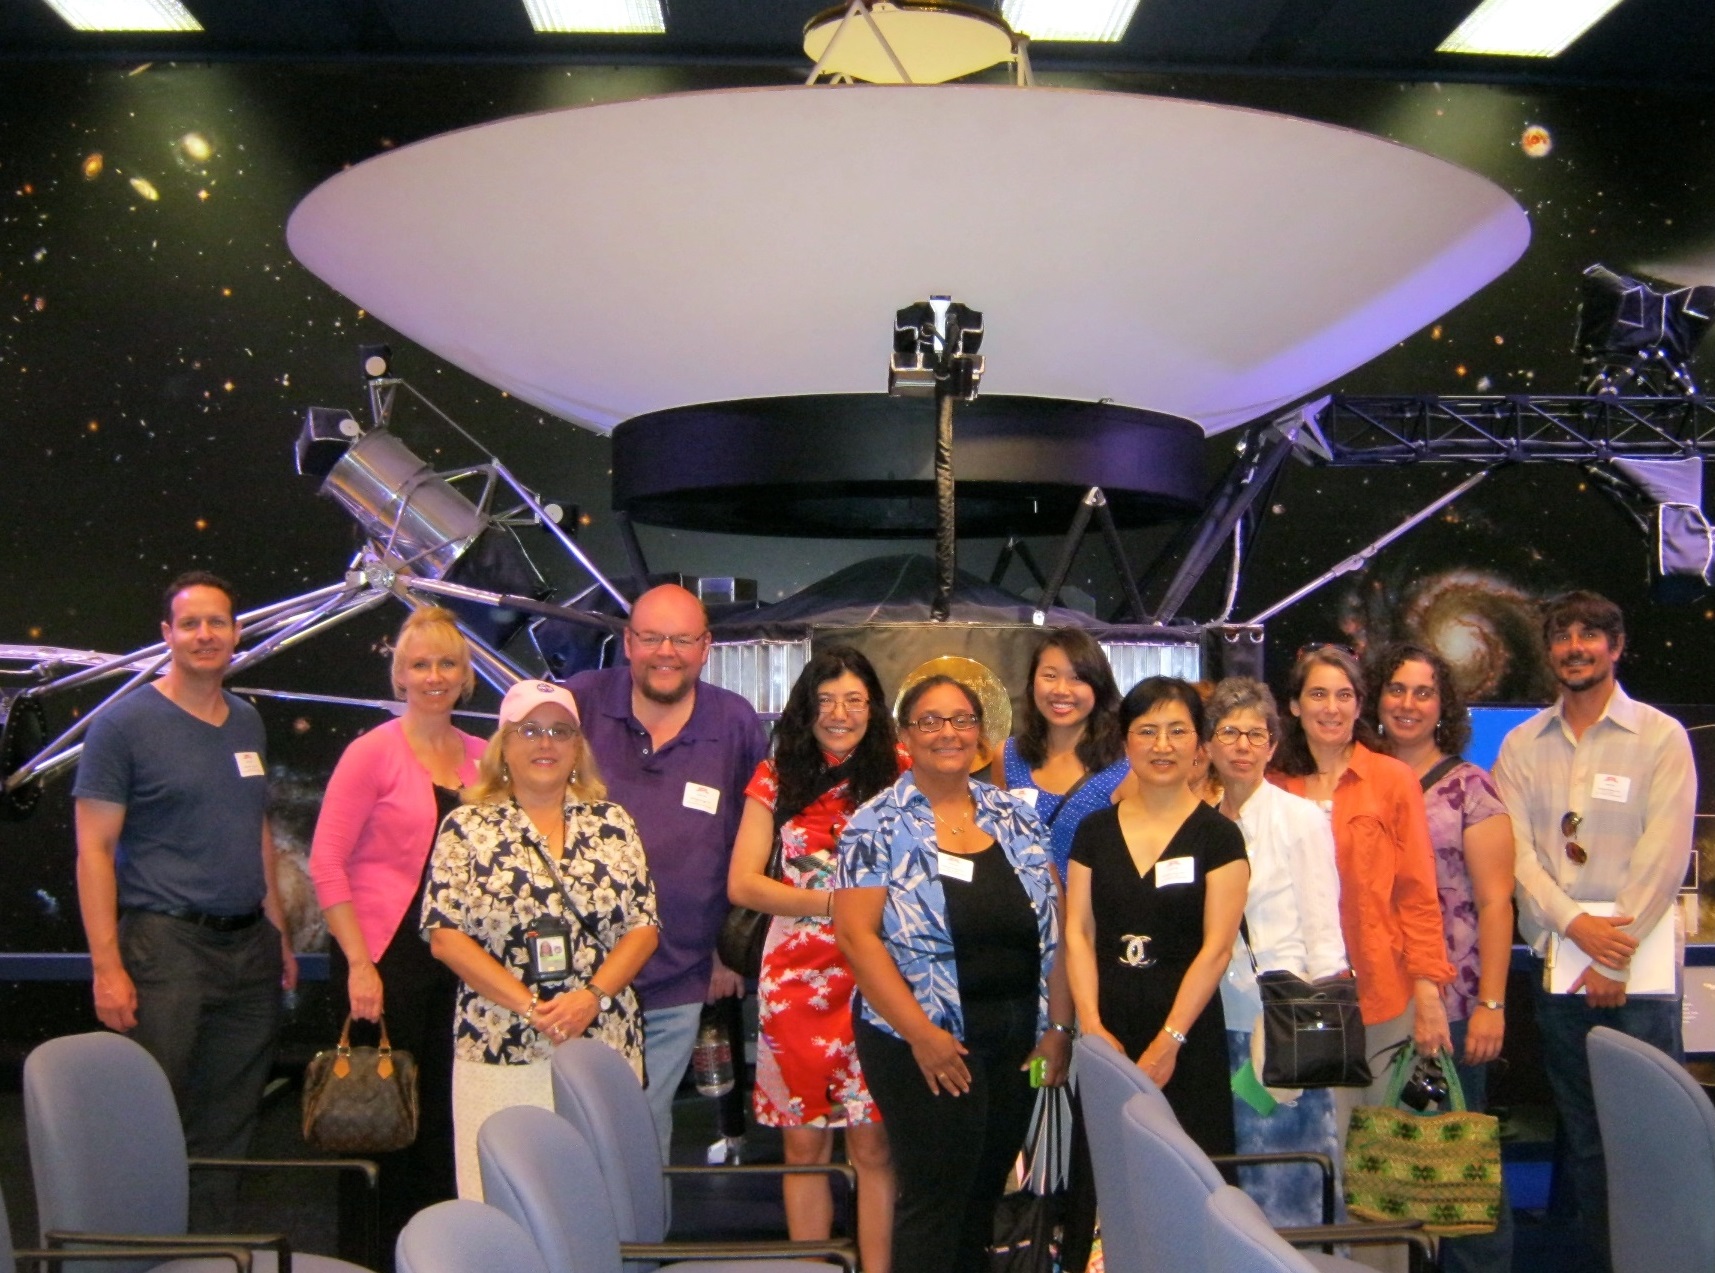 Exploring JPL group photo